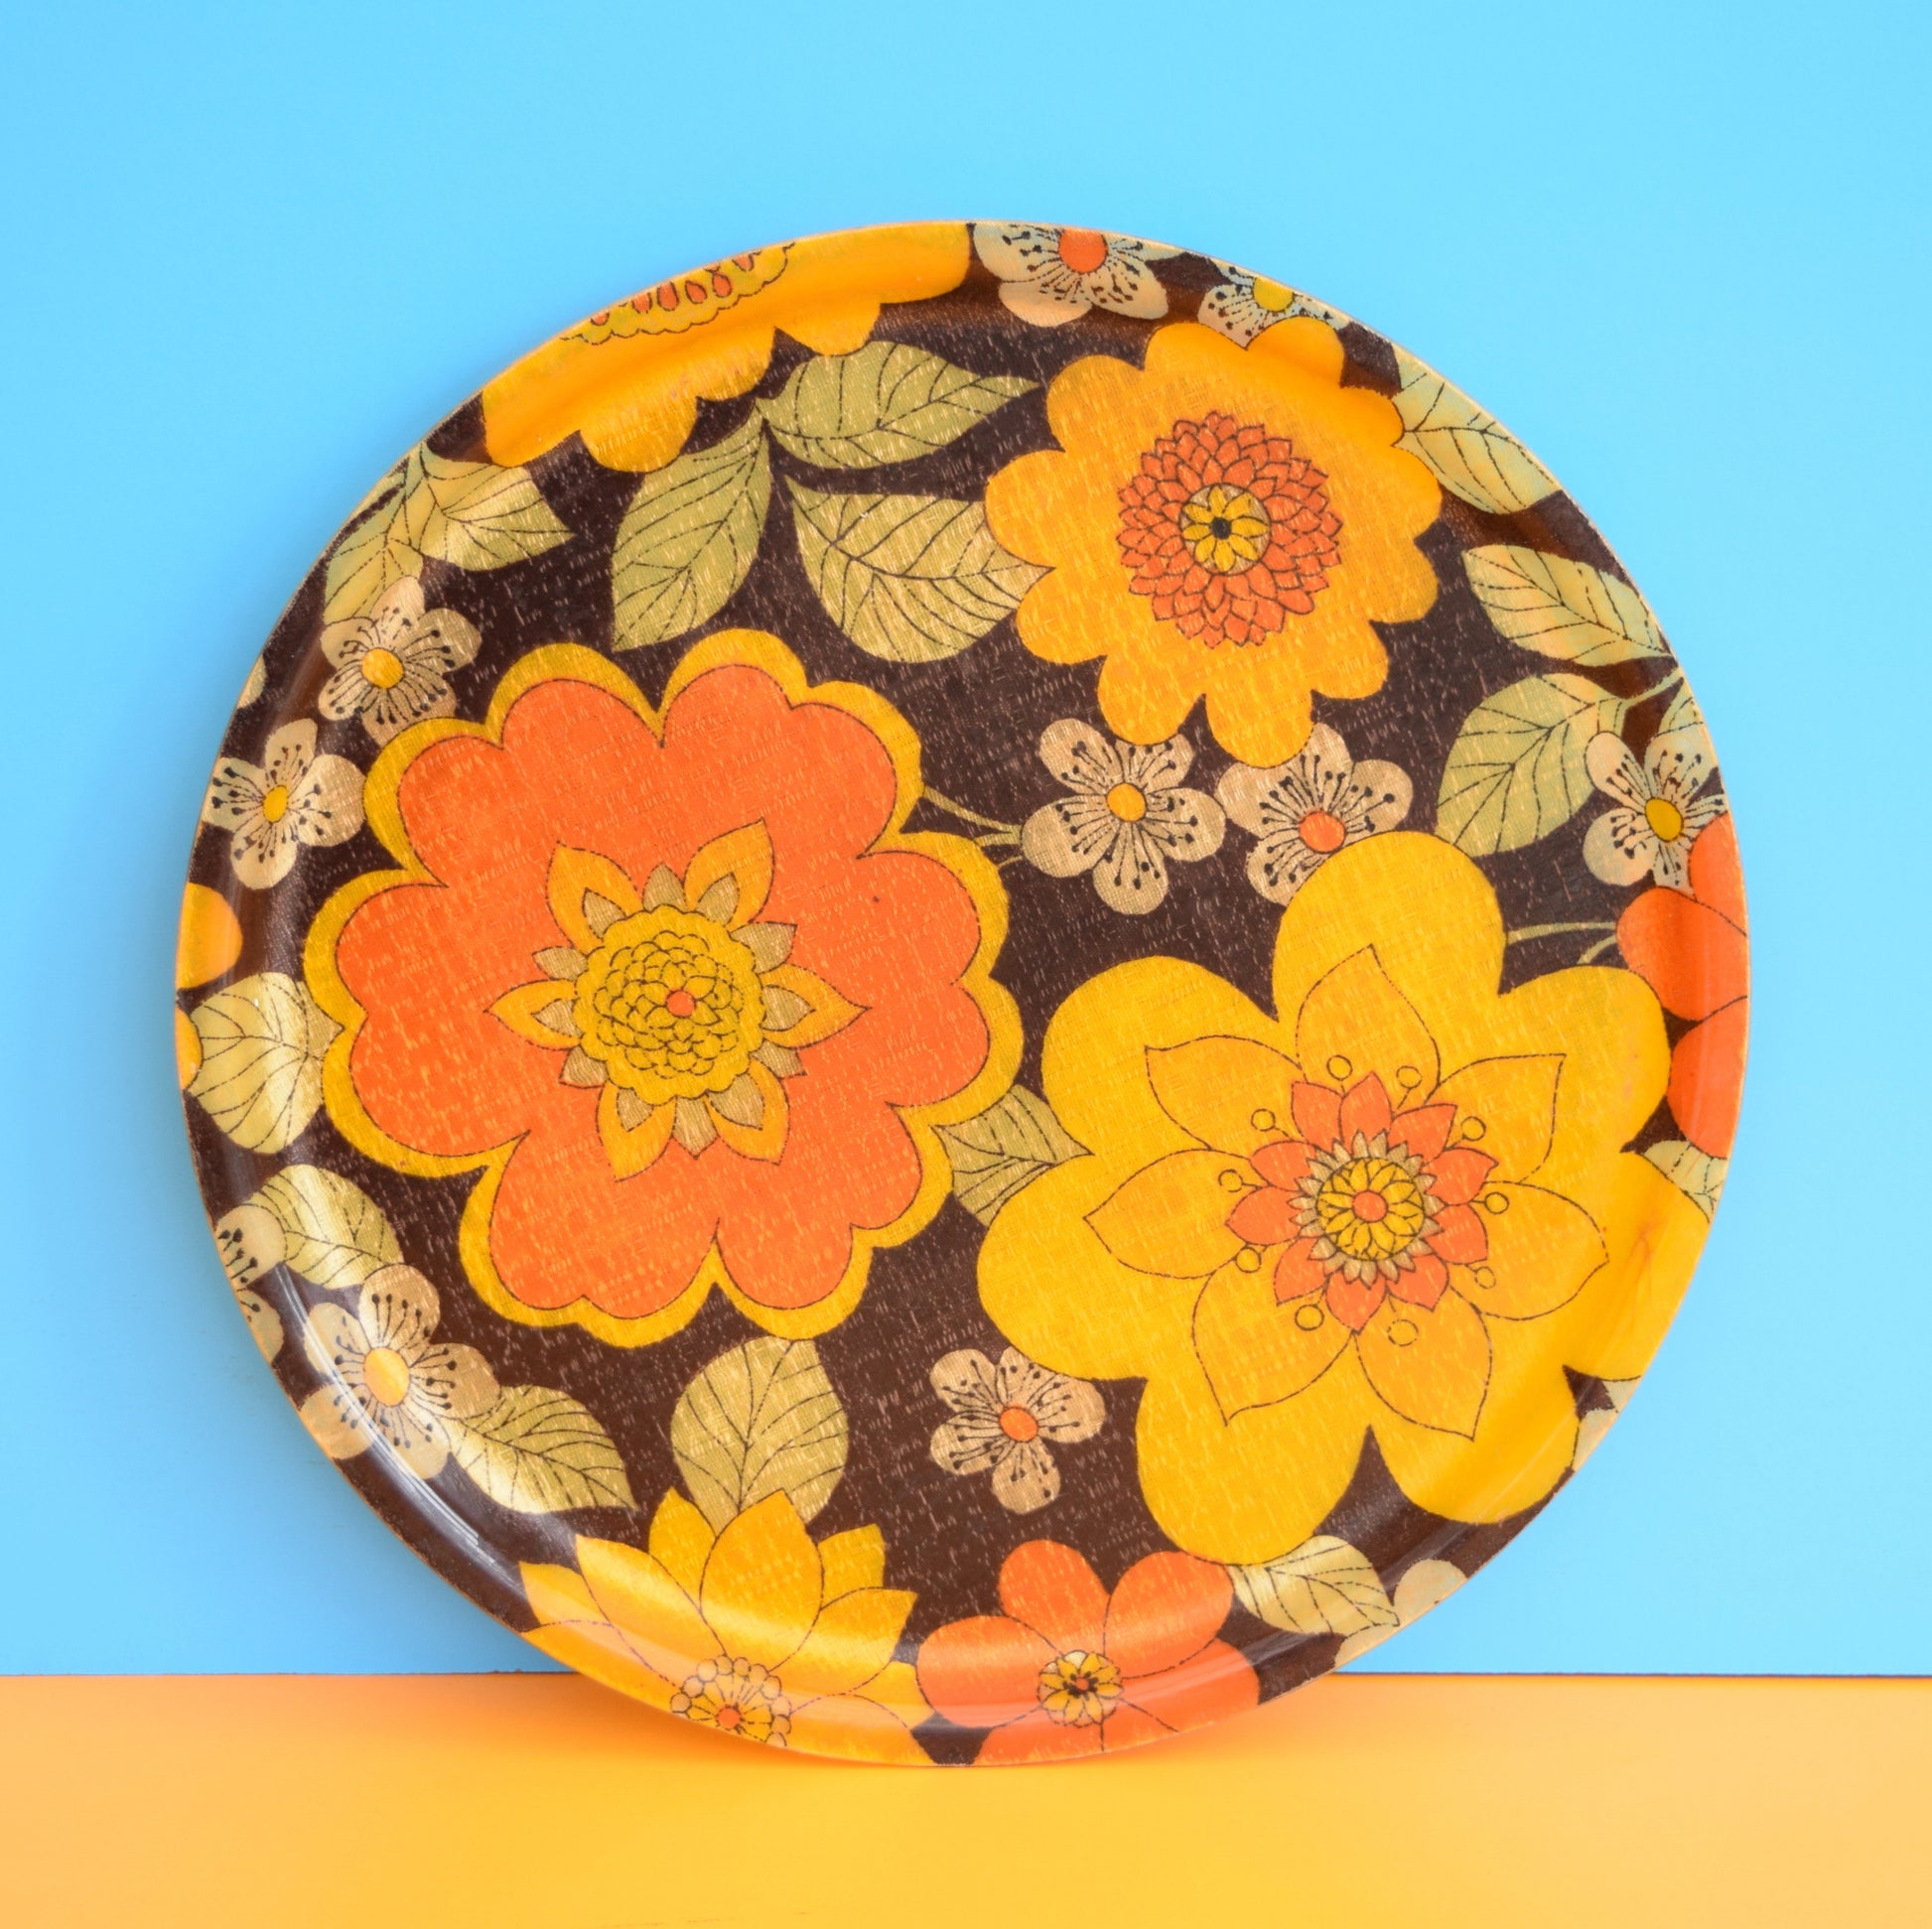 Vintage 1960s Flower Power Round Fibreglass Tray - Orange